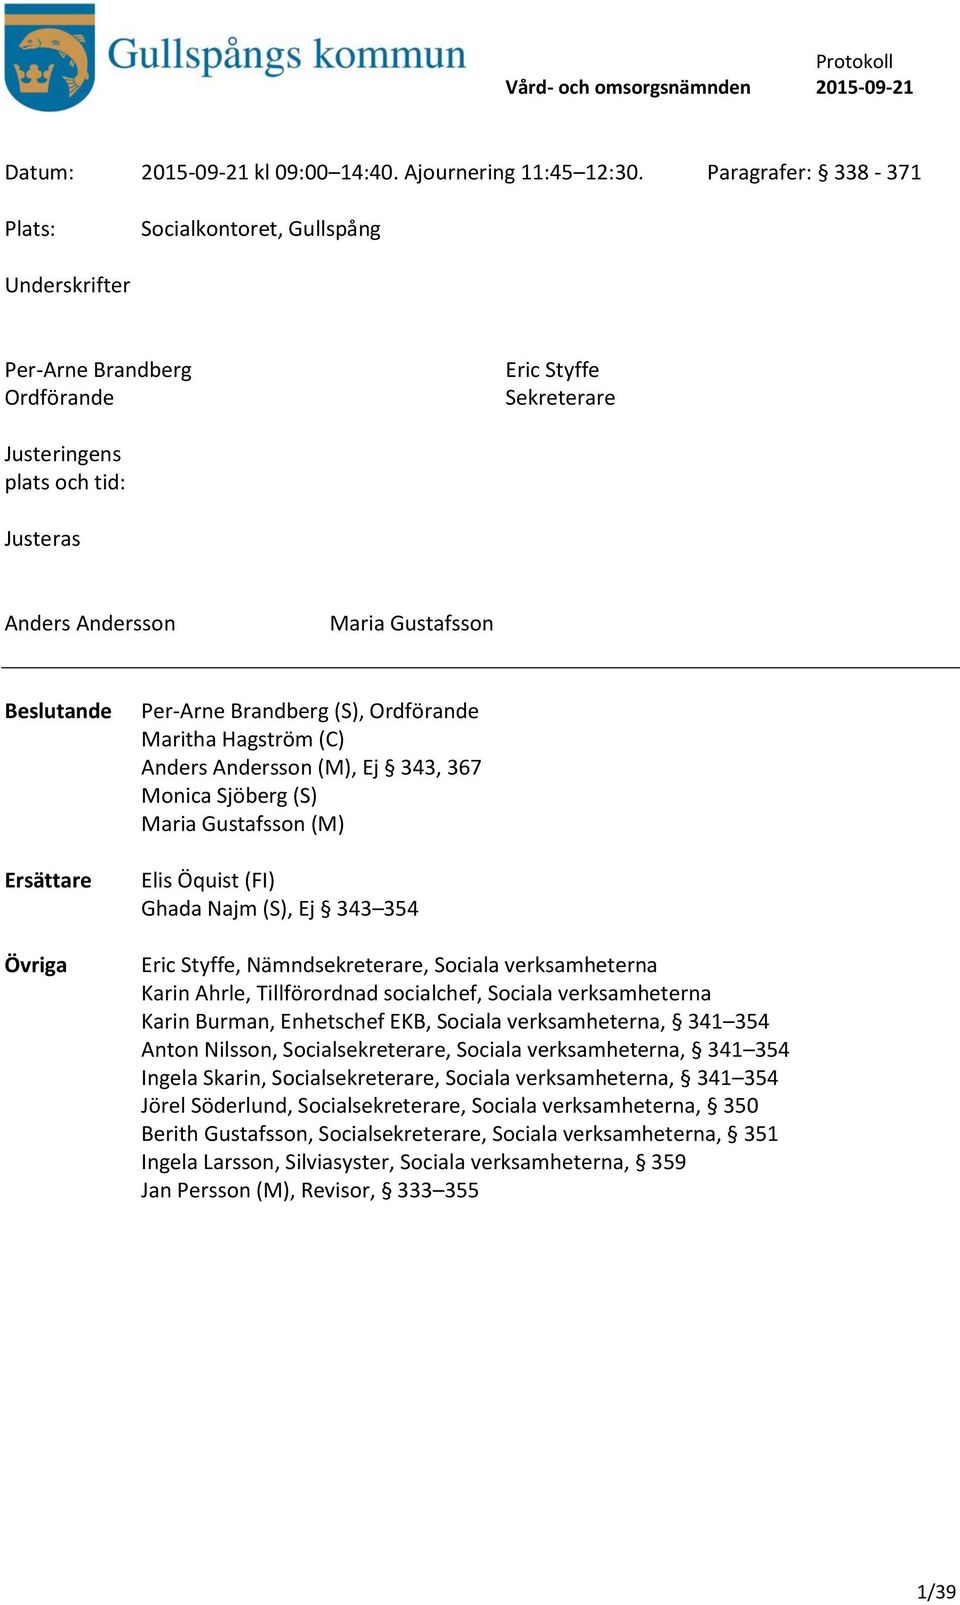 Ersättare Övriga Per-Arne Brandberg (S), Ordförande Maritha Hagström (C) Anders Andersson (M), Ej 343, 367 Monica Sjöberg (S) Maria Gustafsson (M) Elis Öquist (FI) Ghada Najm (S), Ej 343 354 Eric